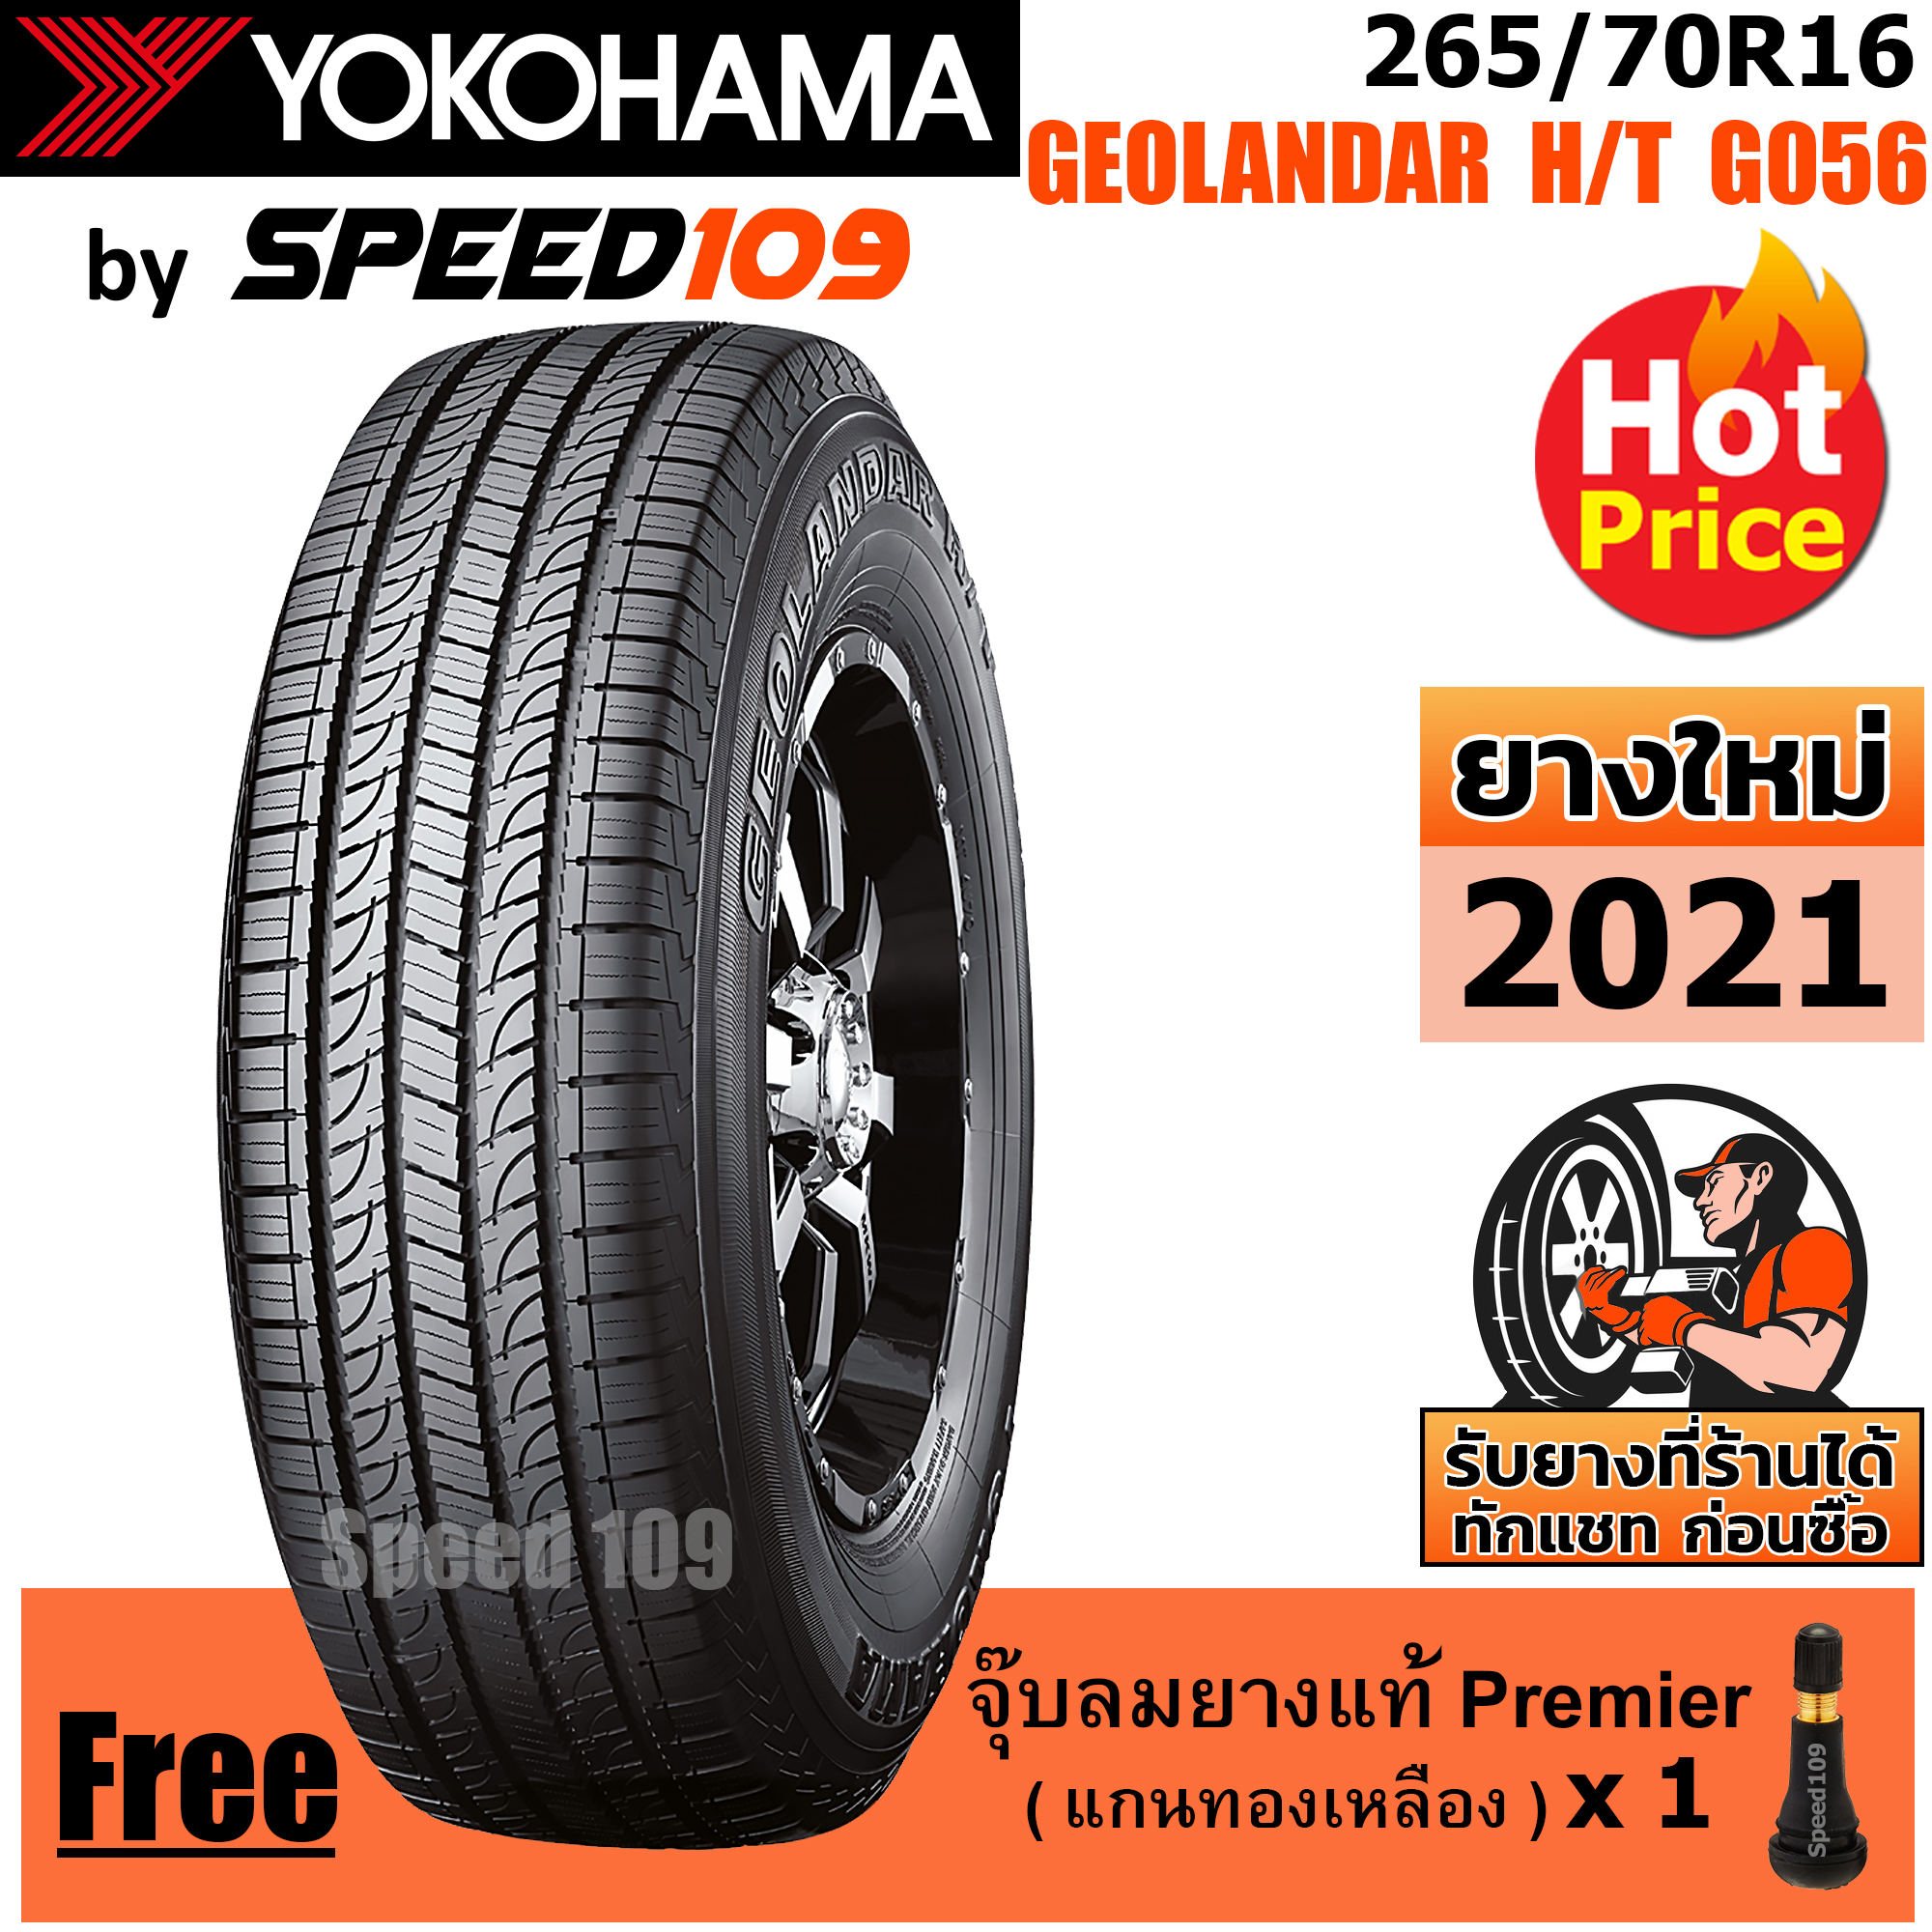 YOKOHAMA ยางรถยนต์ ขอบ 16 ขนาด 265/70R16 รุ่น GEOLANDAR H/T G056 - 1 เส้น (ปี 2021)